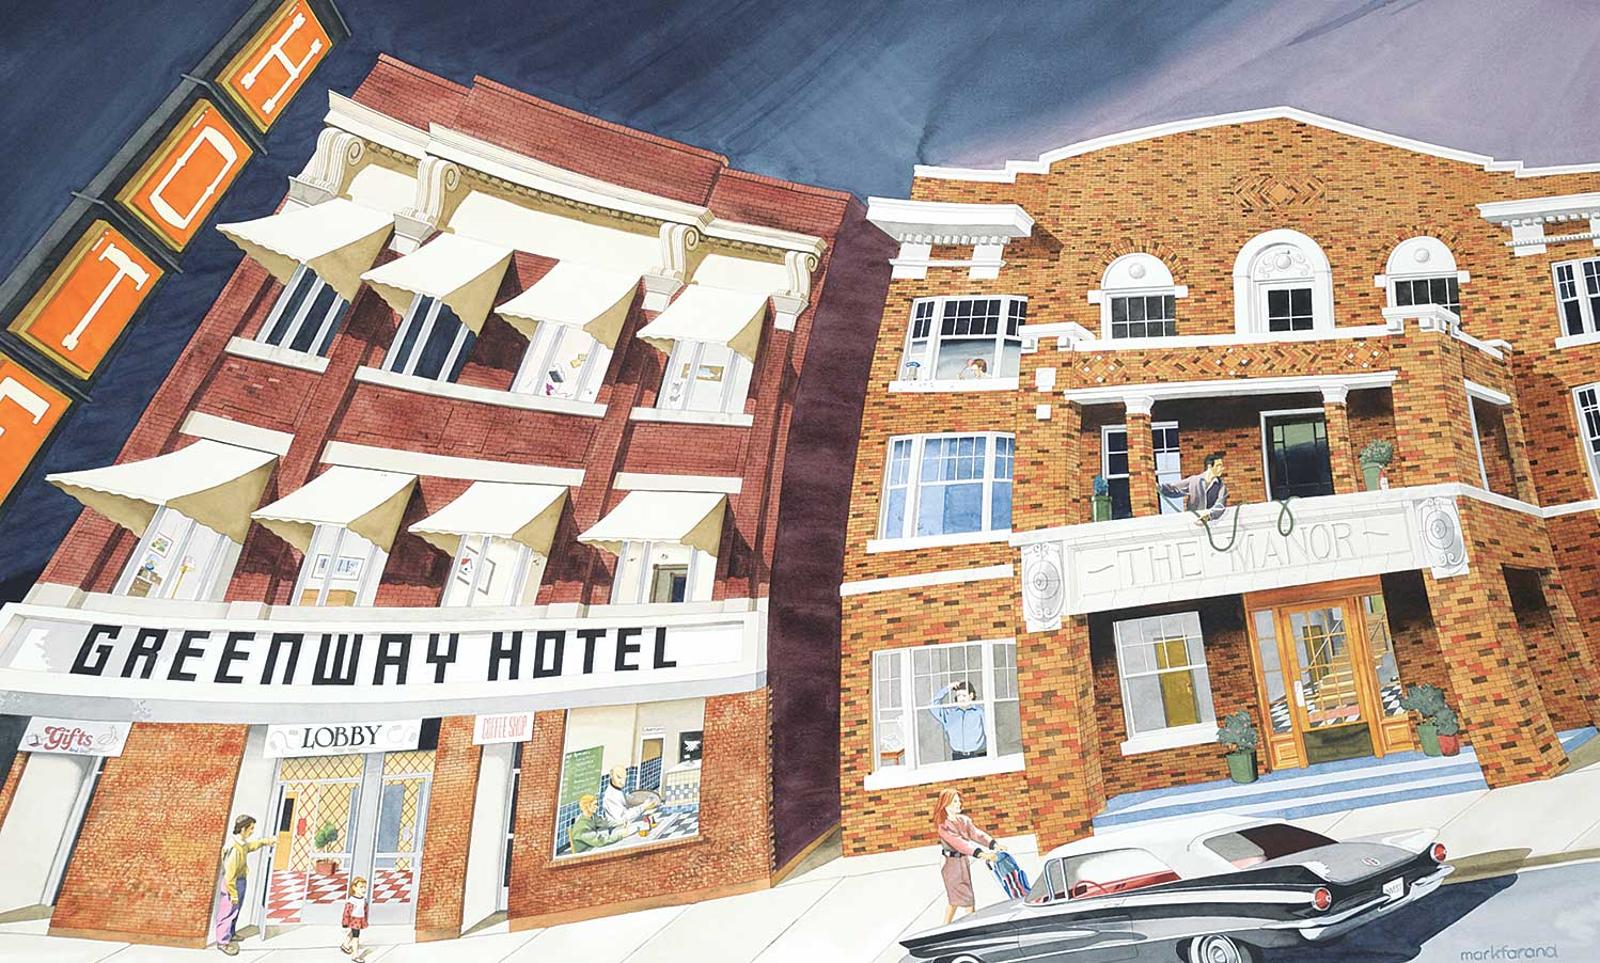 Mark Farand - Untitled - The Greenway Hotel